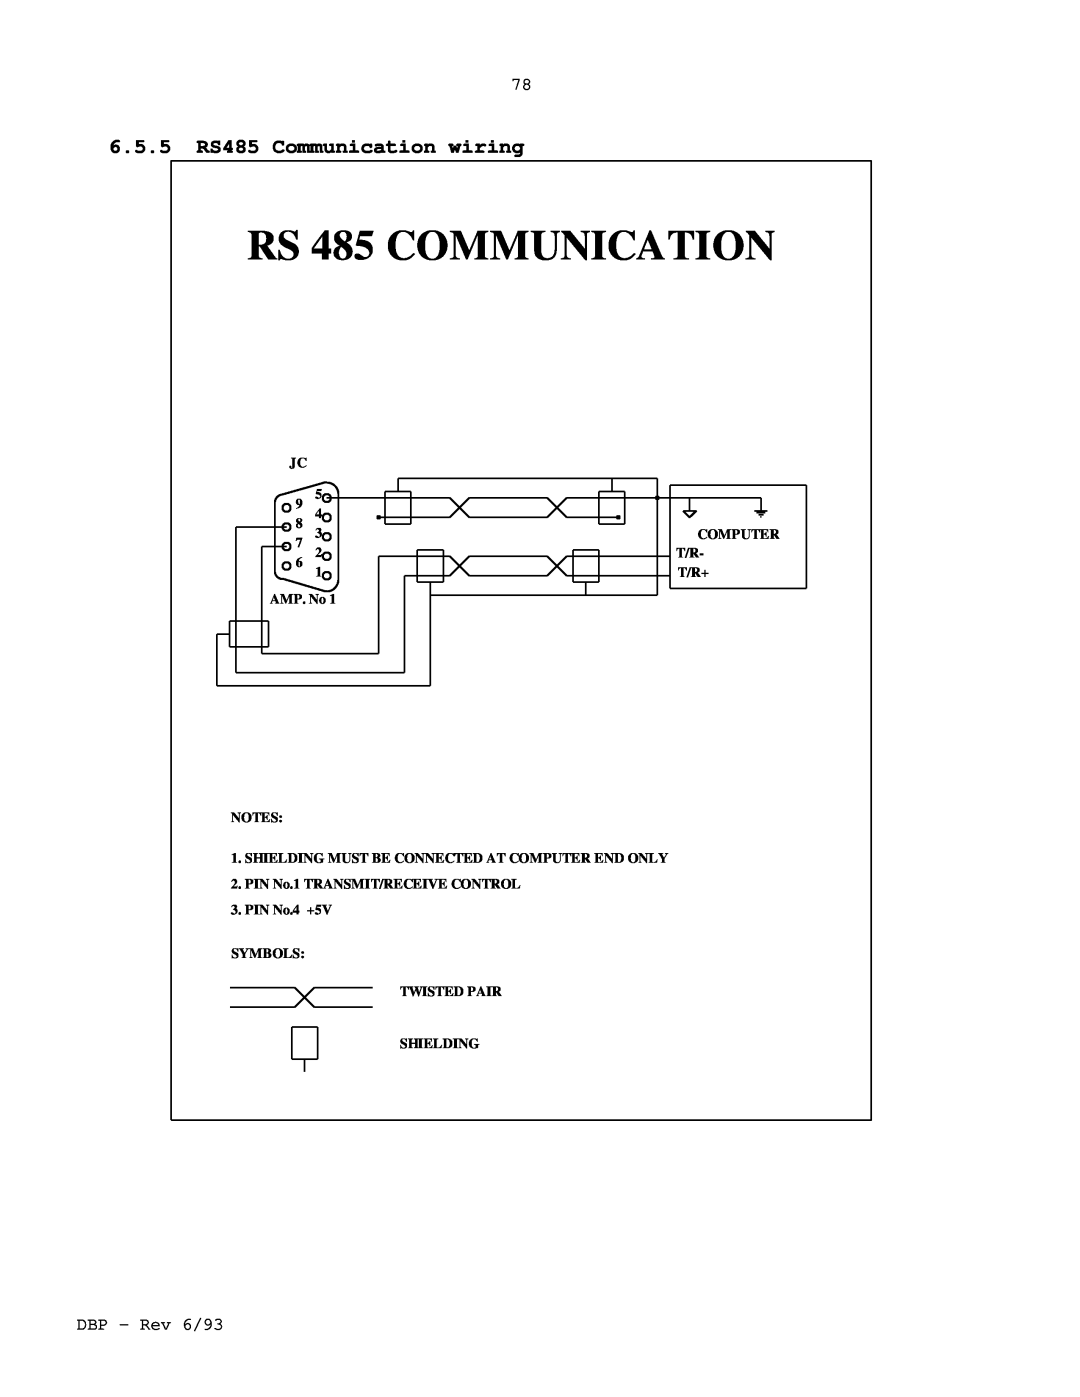 Elmo DBP SERIES manual RS 485 COMMUNICATION, 6.5.5RS485 Communication wiring 